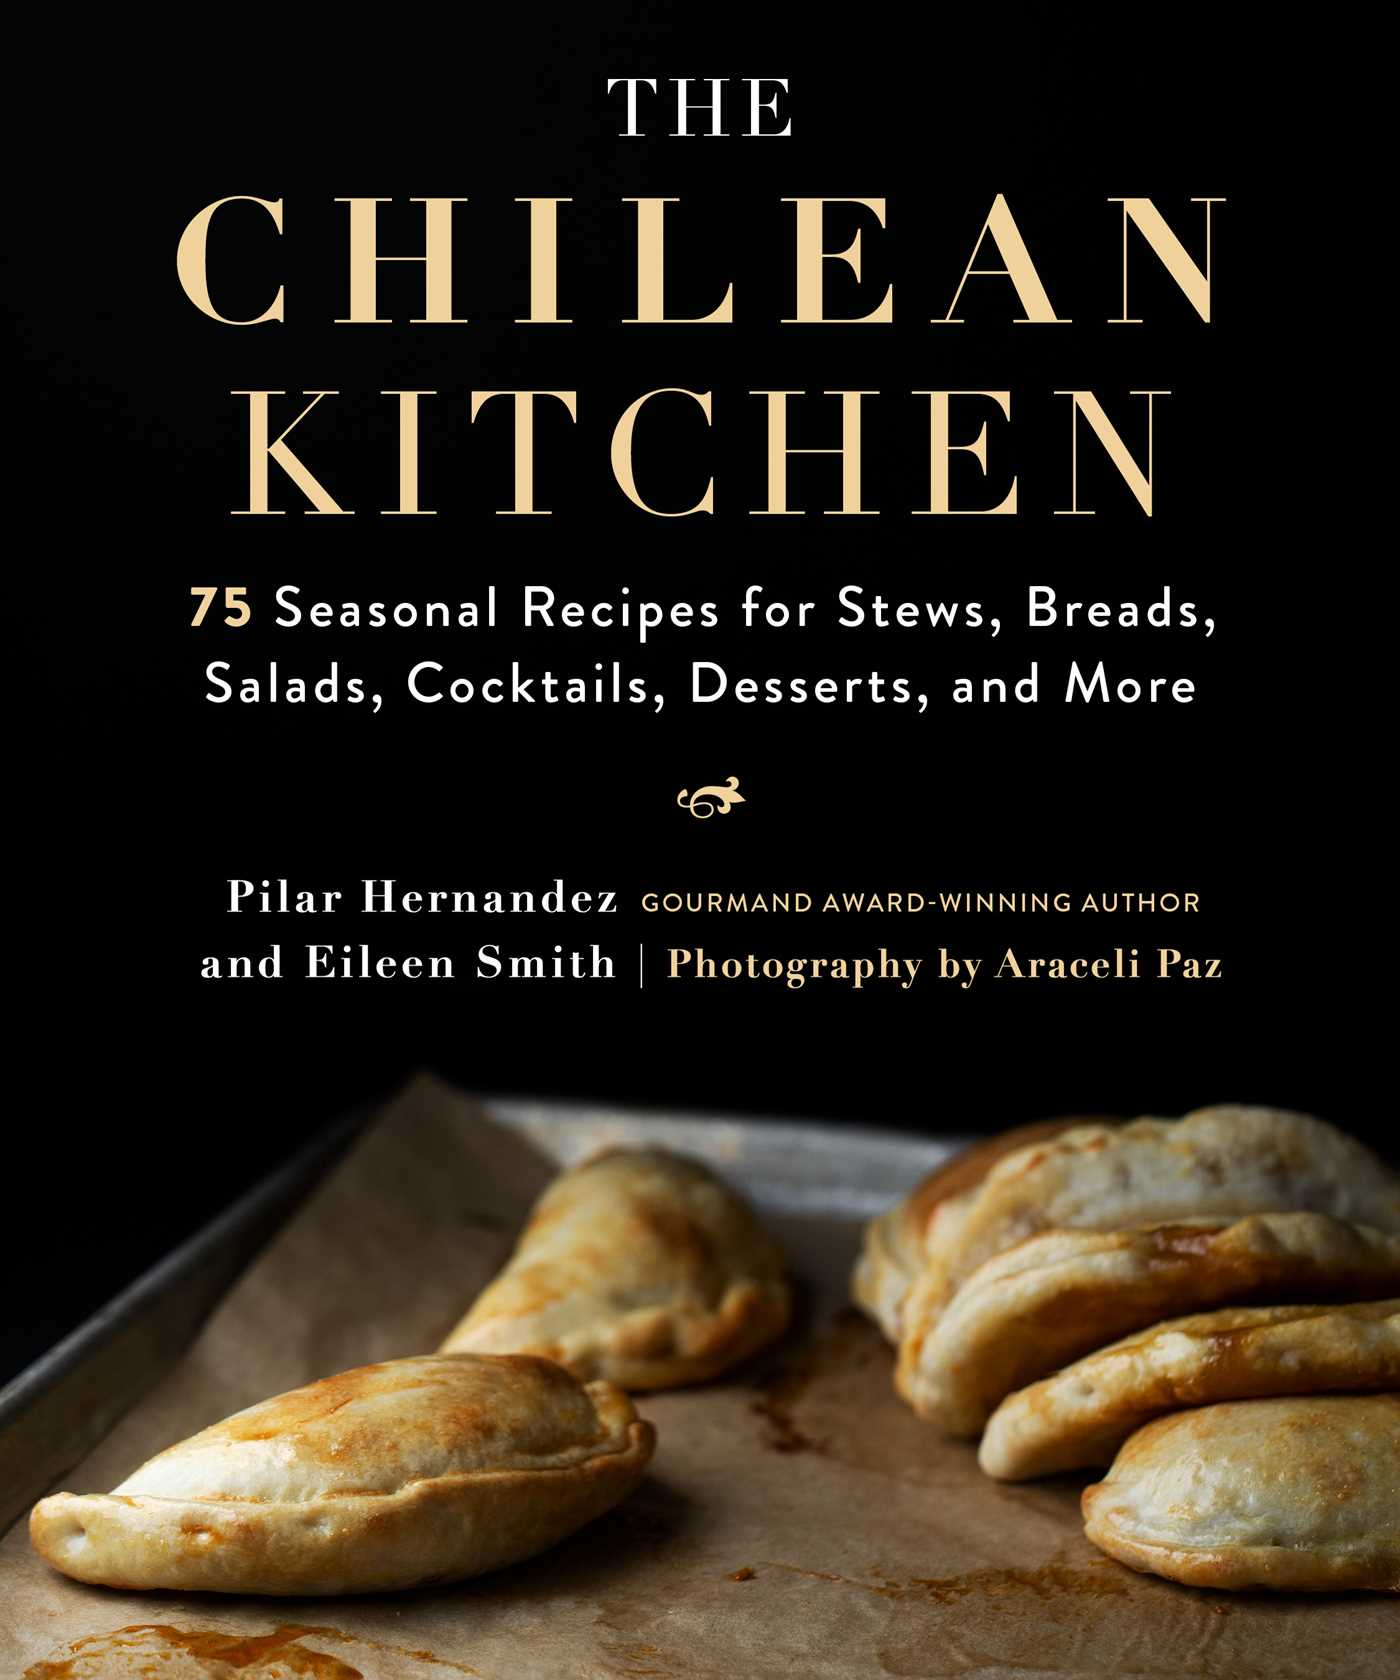 Pilar Hernandez, Eileen Smith, Araceli Paz: Chilean Kitchen (2020, Skyhorse Publishing Company, Incorporated)